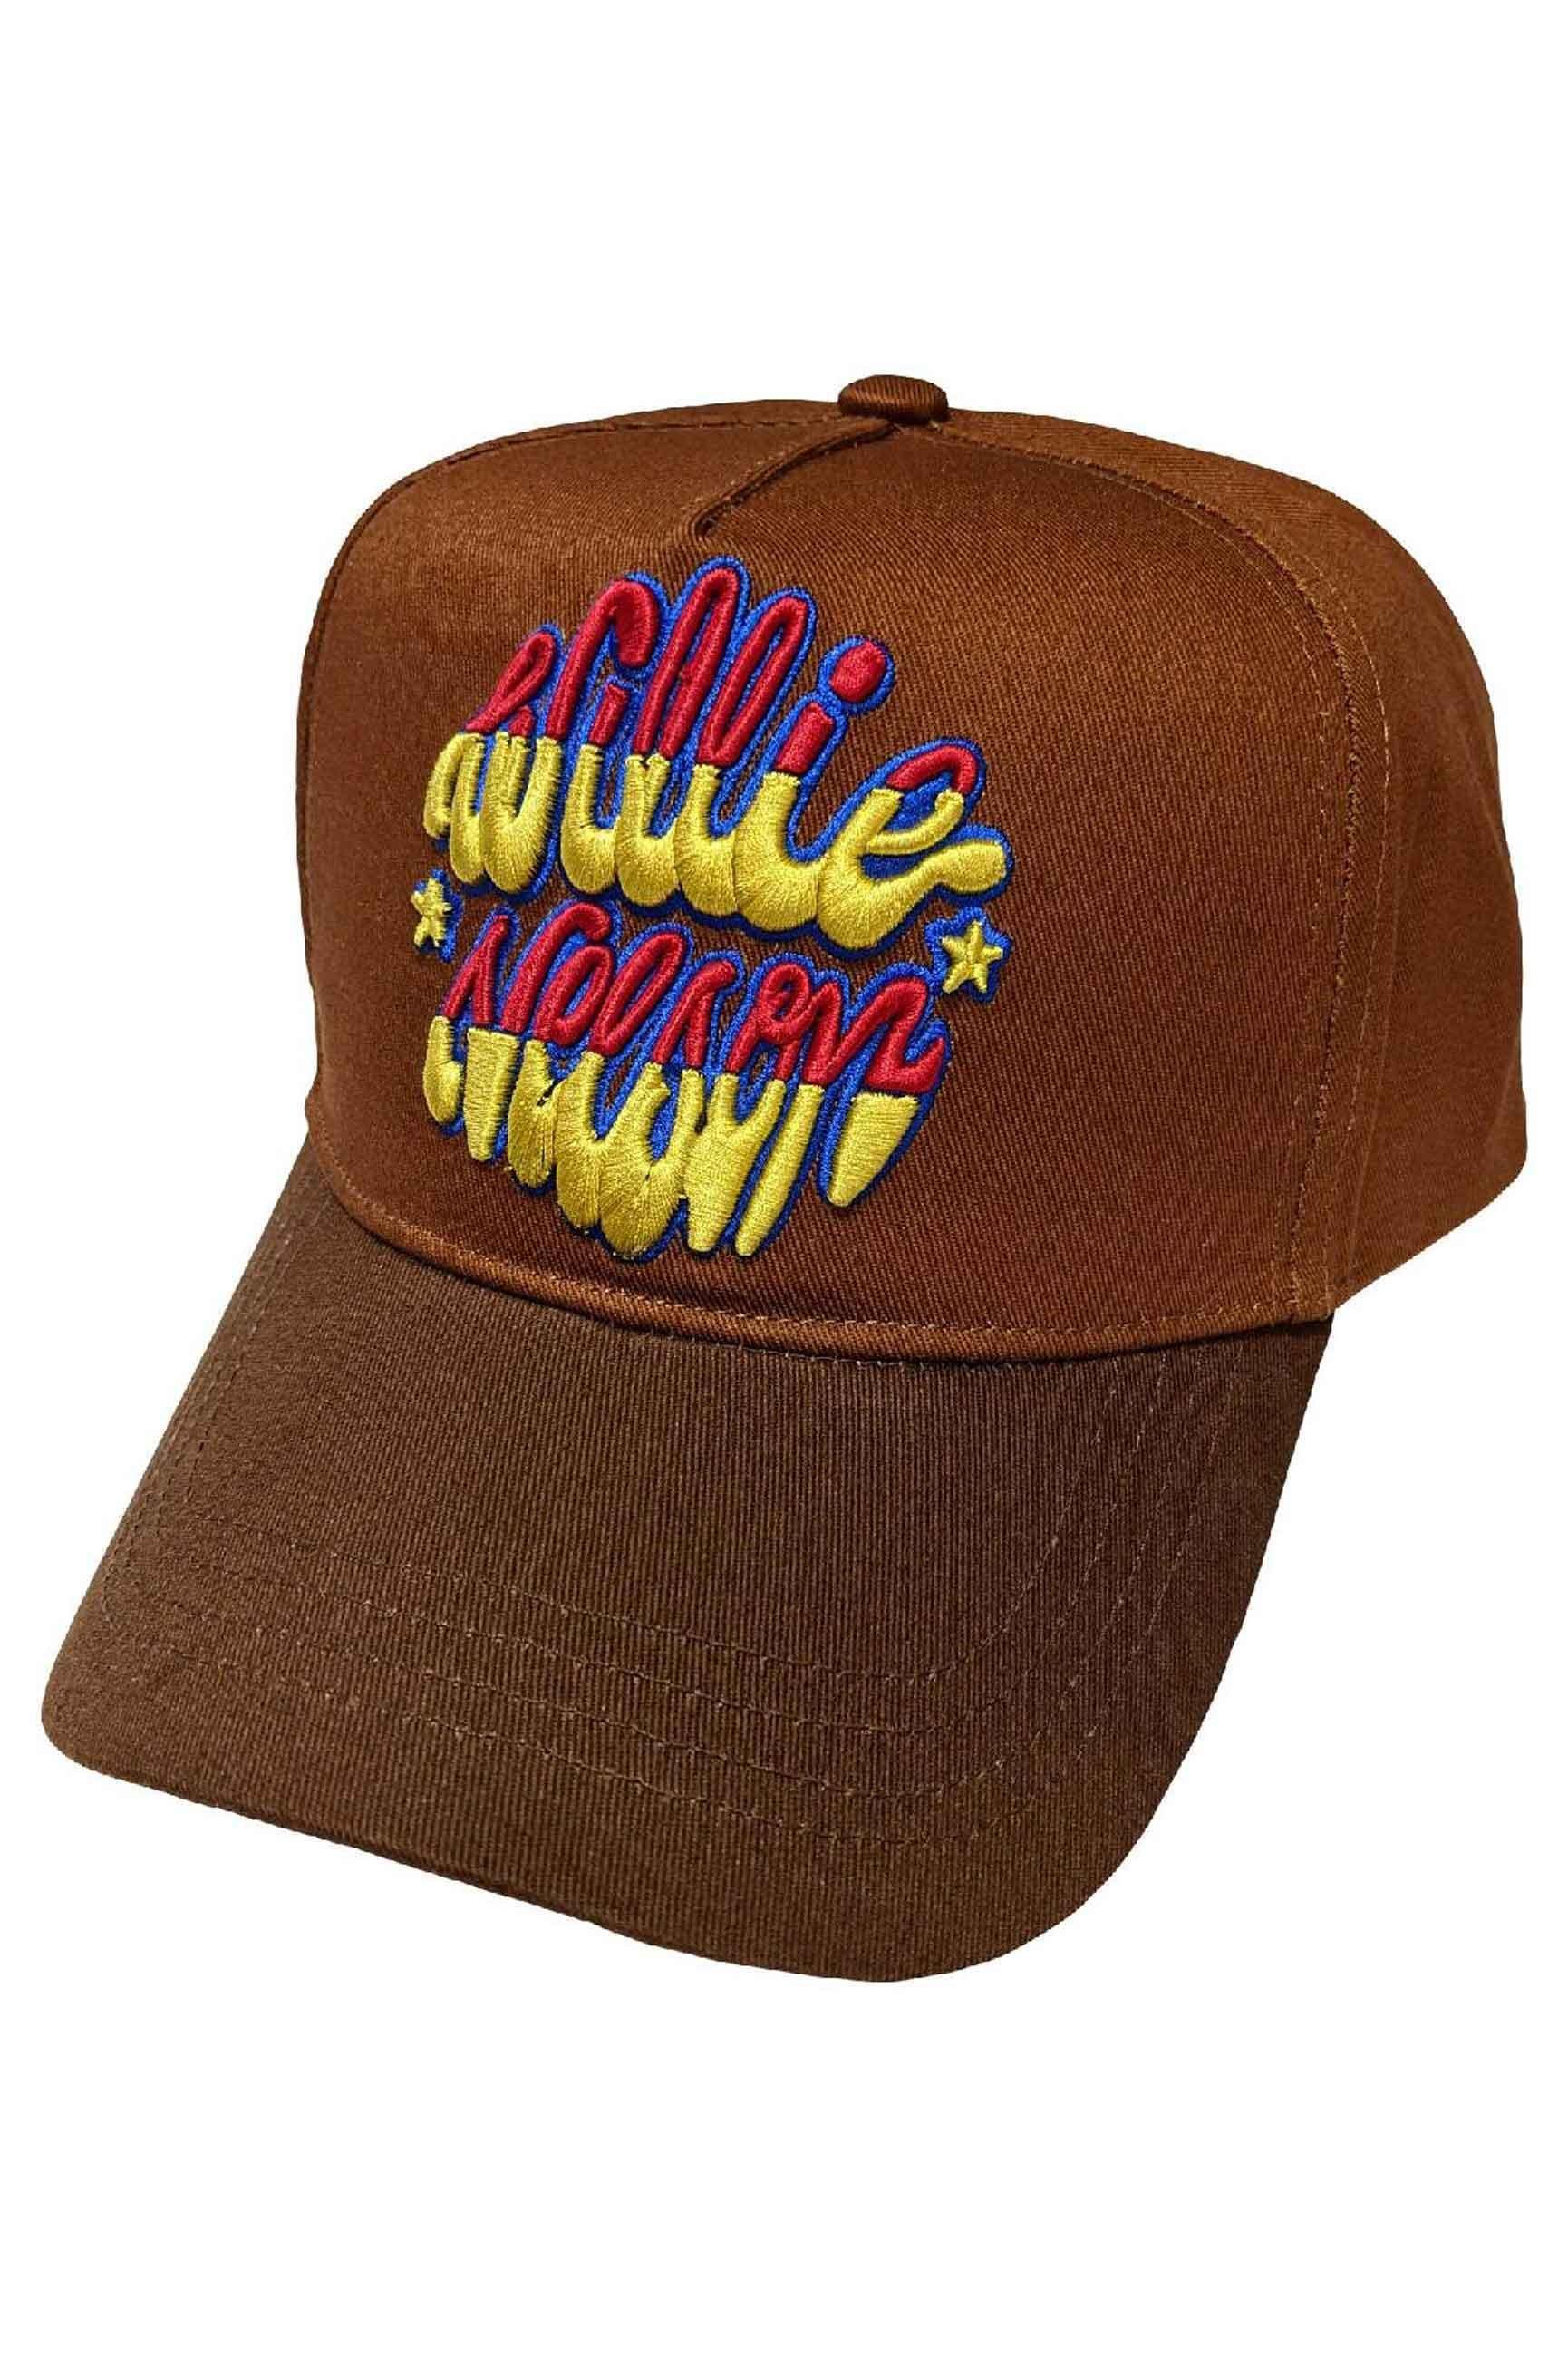 Бейсбольная кепка с логотипом и эмблемой Willie Nelson, коричневый willie nelson – first rose of spring lp